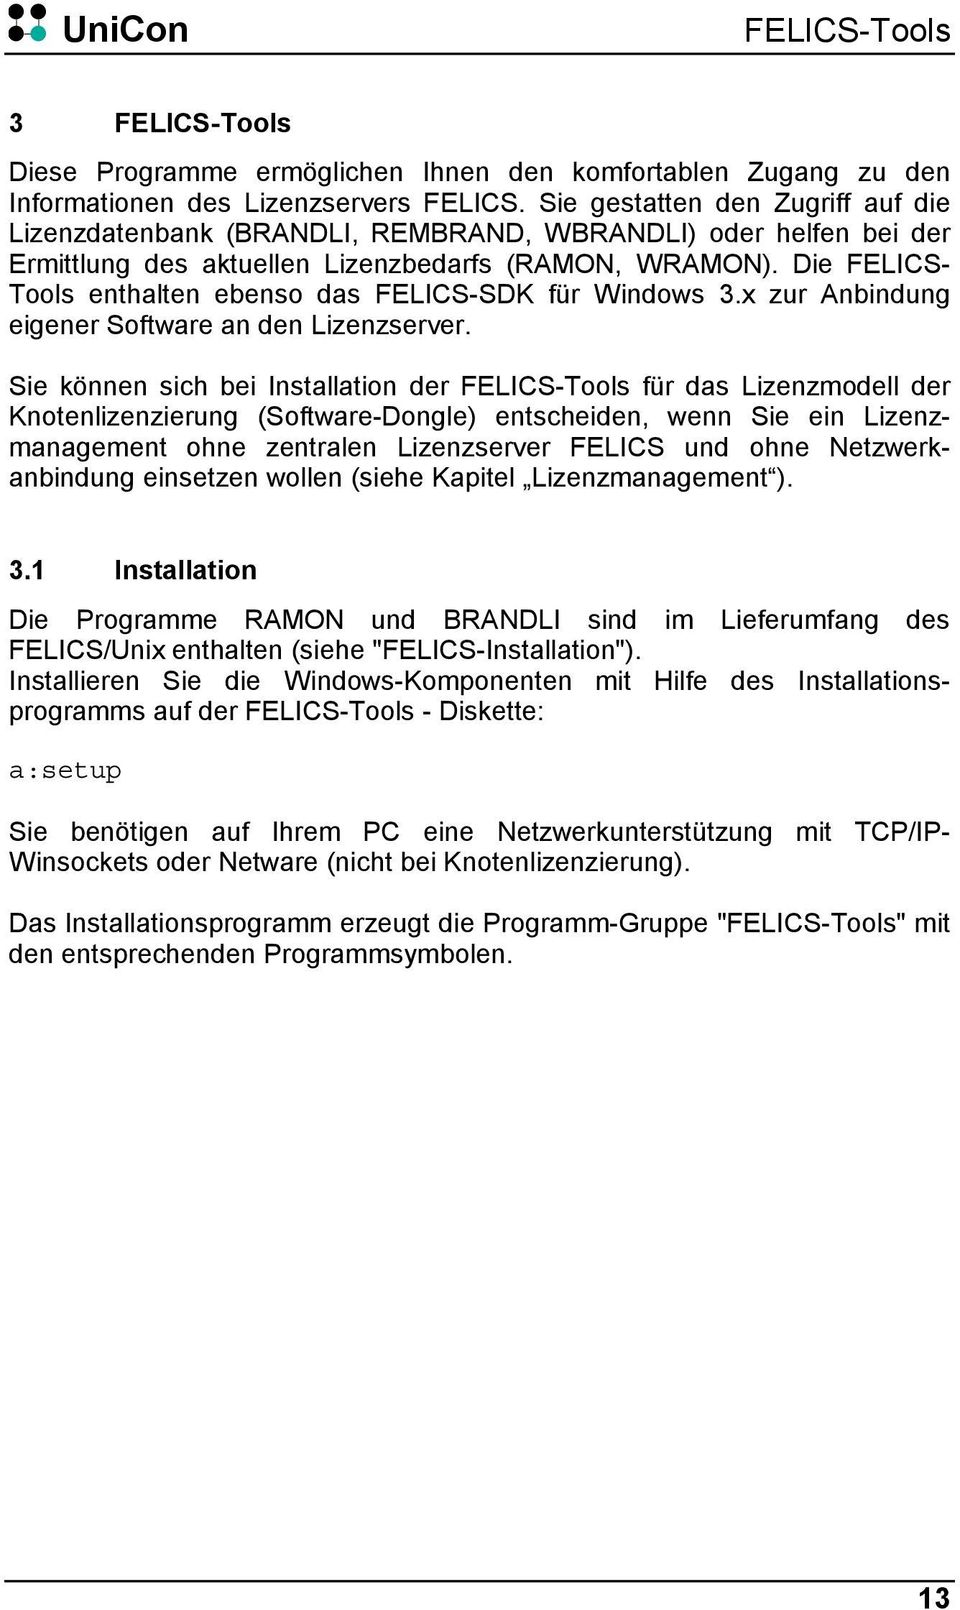 Die FELICS- Tools enthalten ebenso das FELICS-SDK für Windows 3.x zur Anbindung eigener Software an den Lizenzserver.